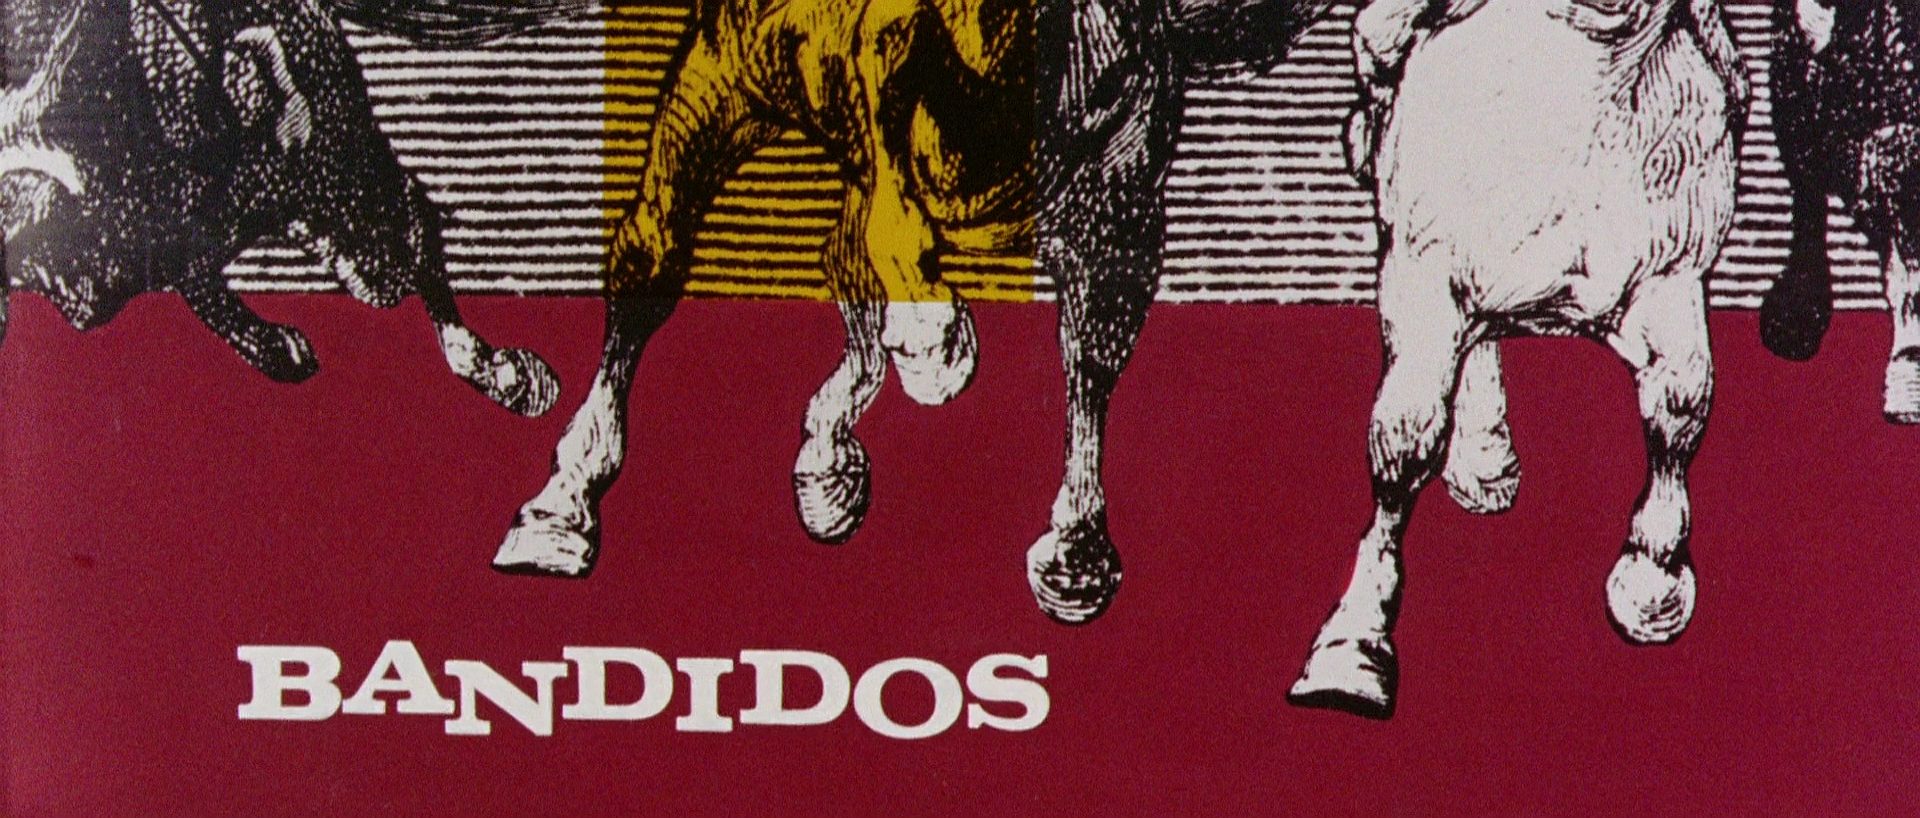 Bandidos - title.jpg